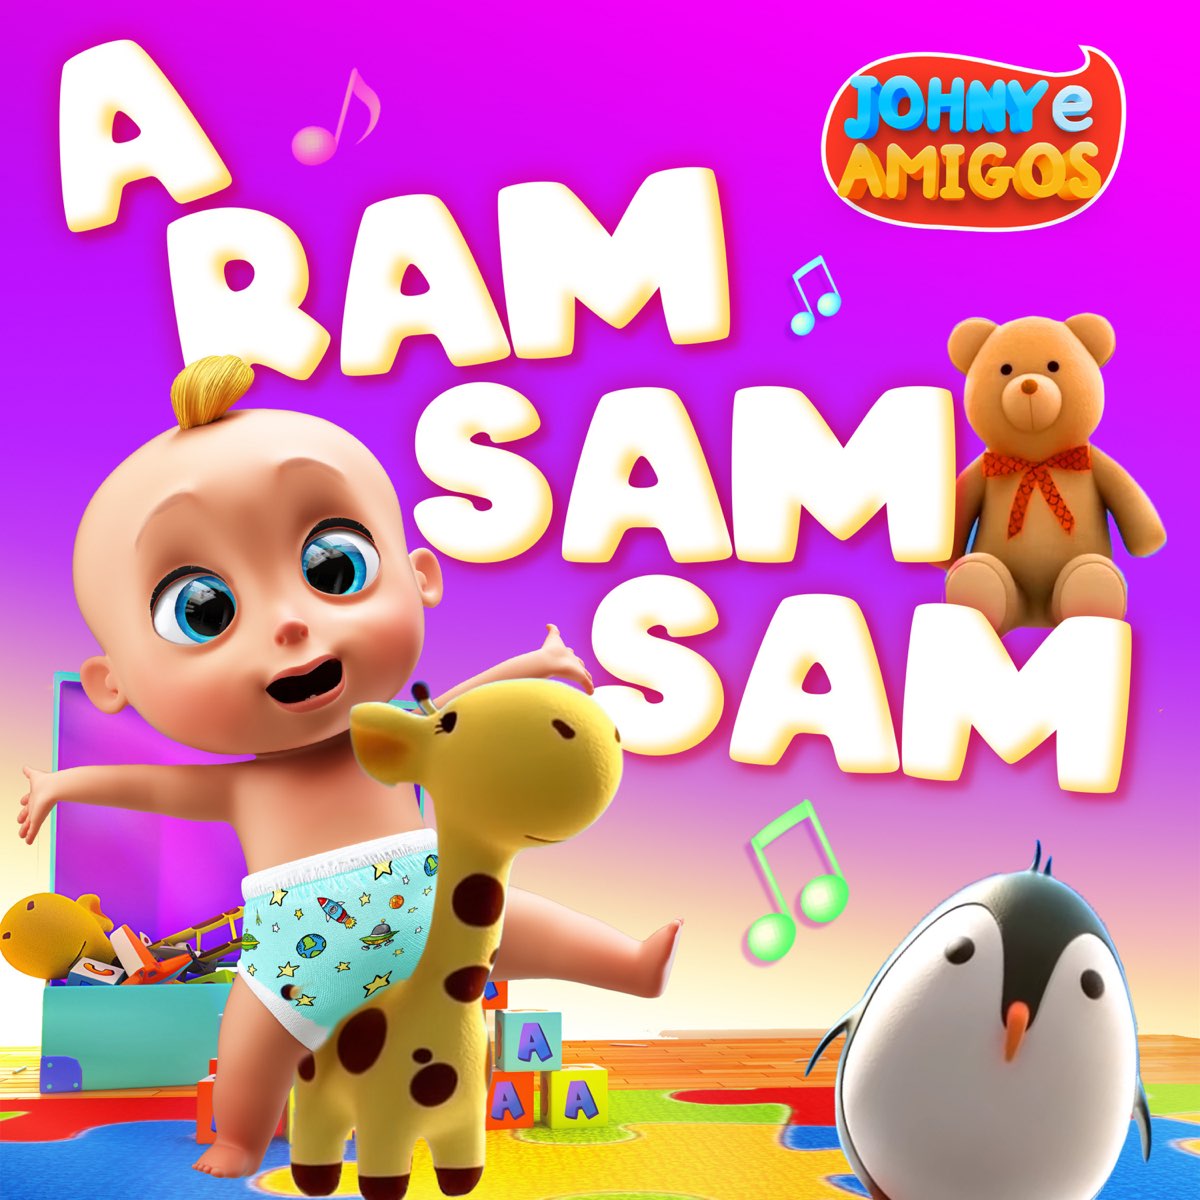 A Ram Sam Sam - Single by Johny e amigos on Apple Music